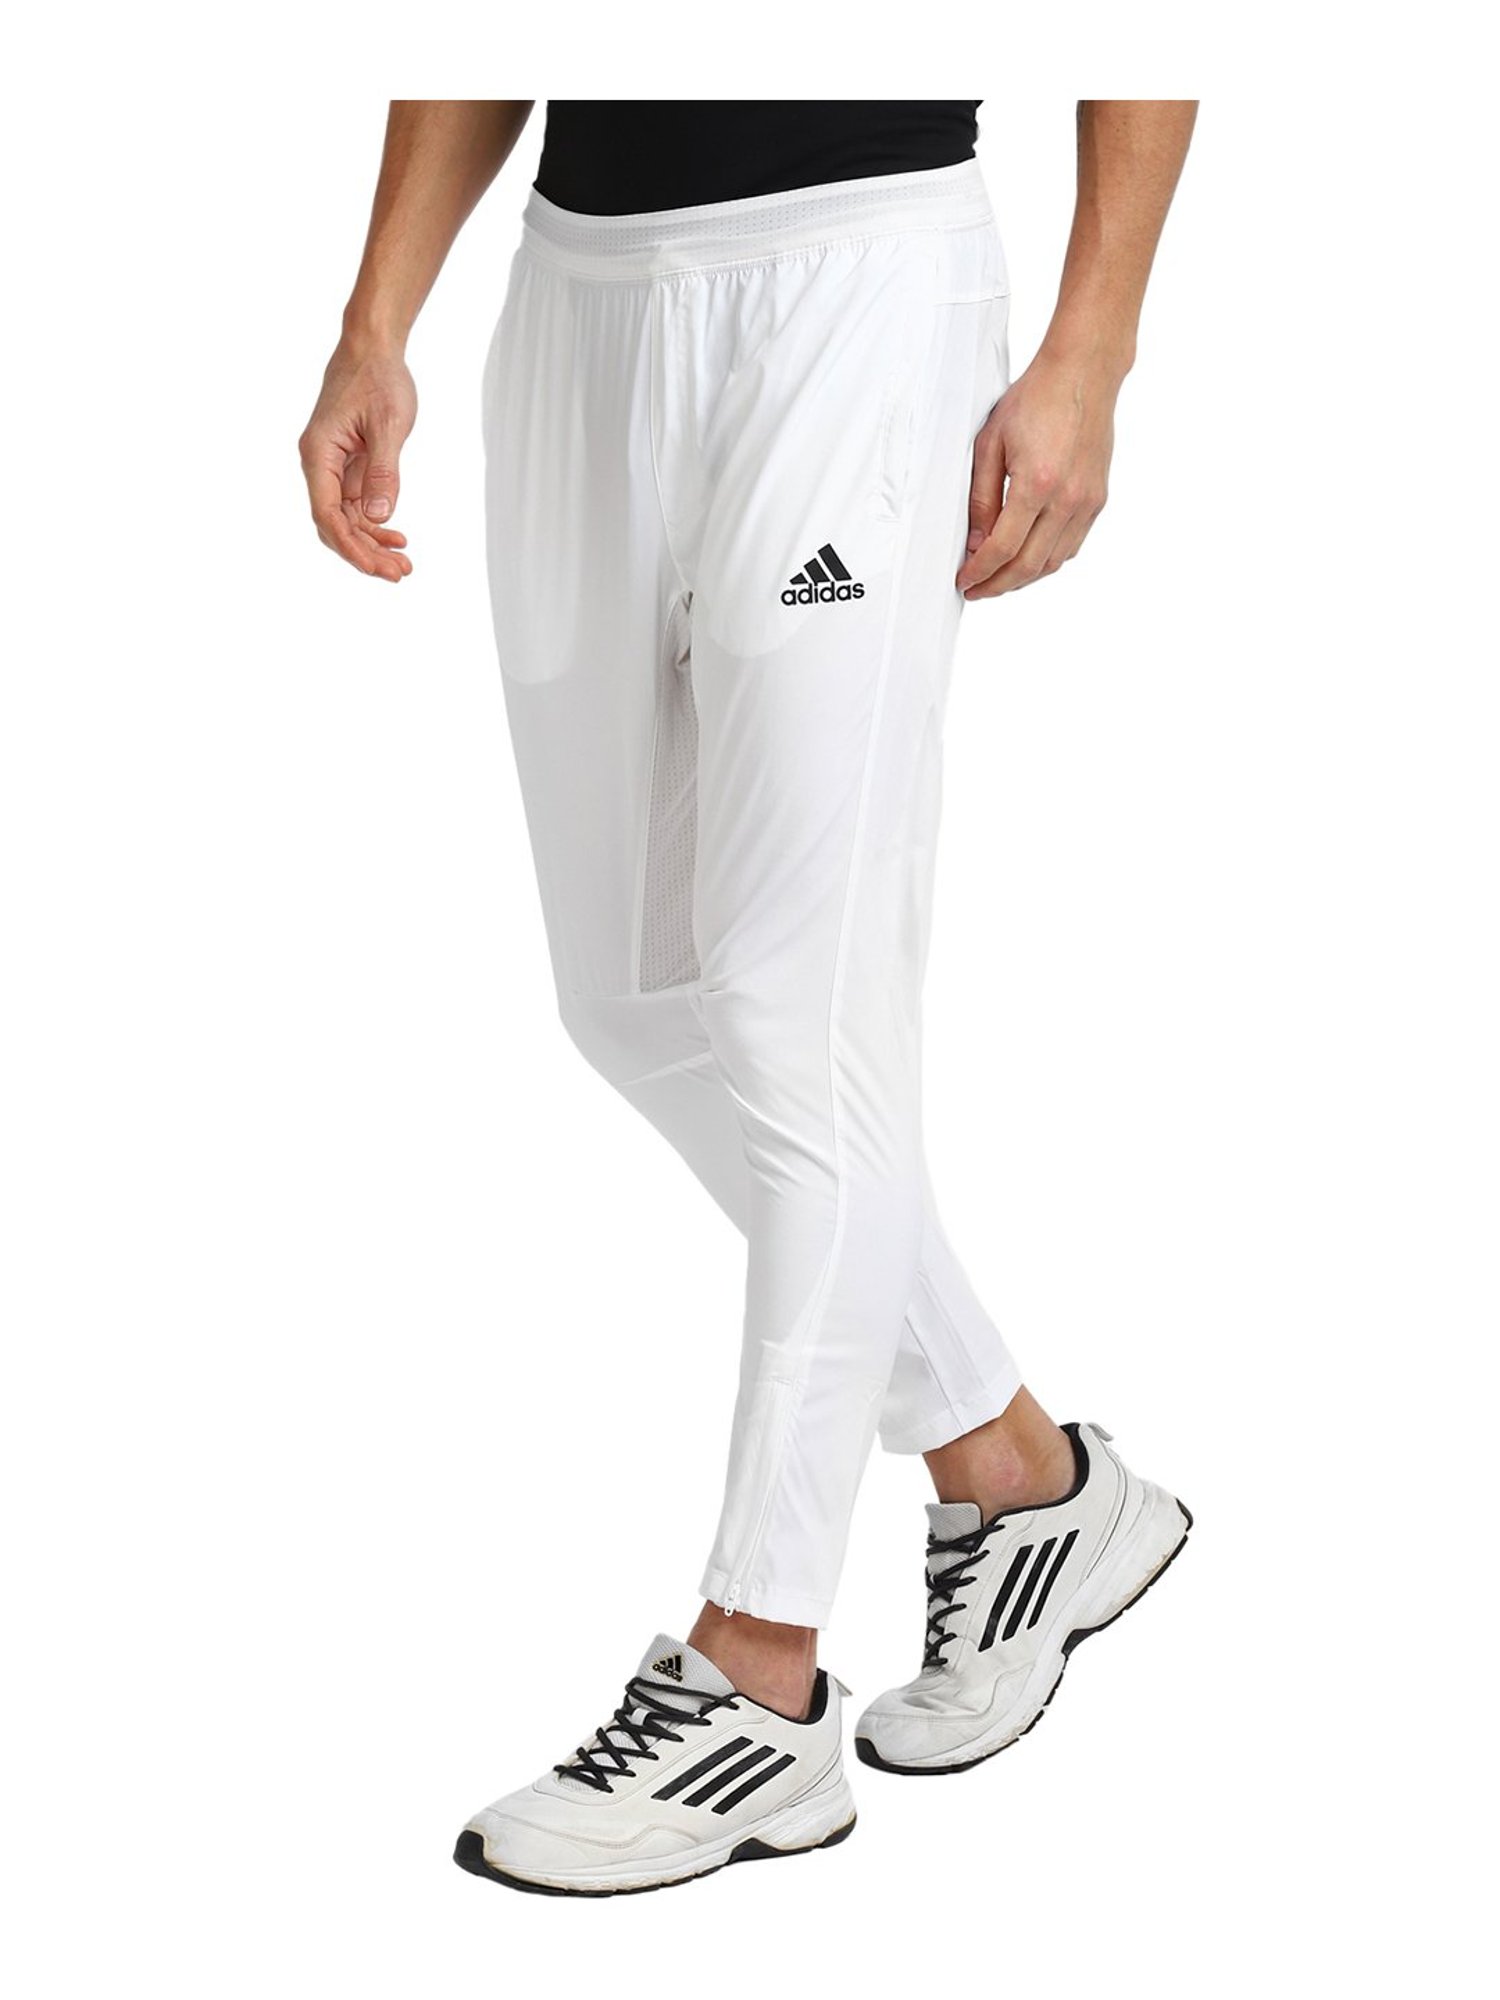 Adidas track pants  xl or XXL any loose fit and straight leg style  Adidas  track pants Track pants mens Black adidas pants